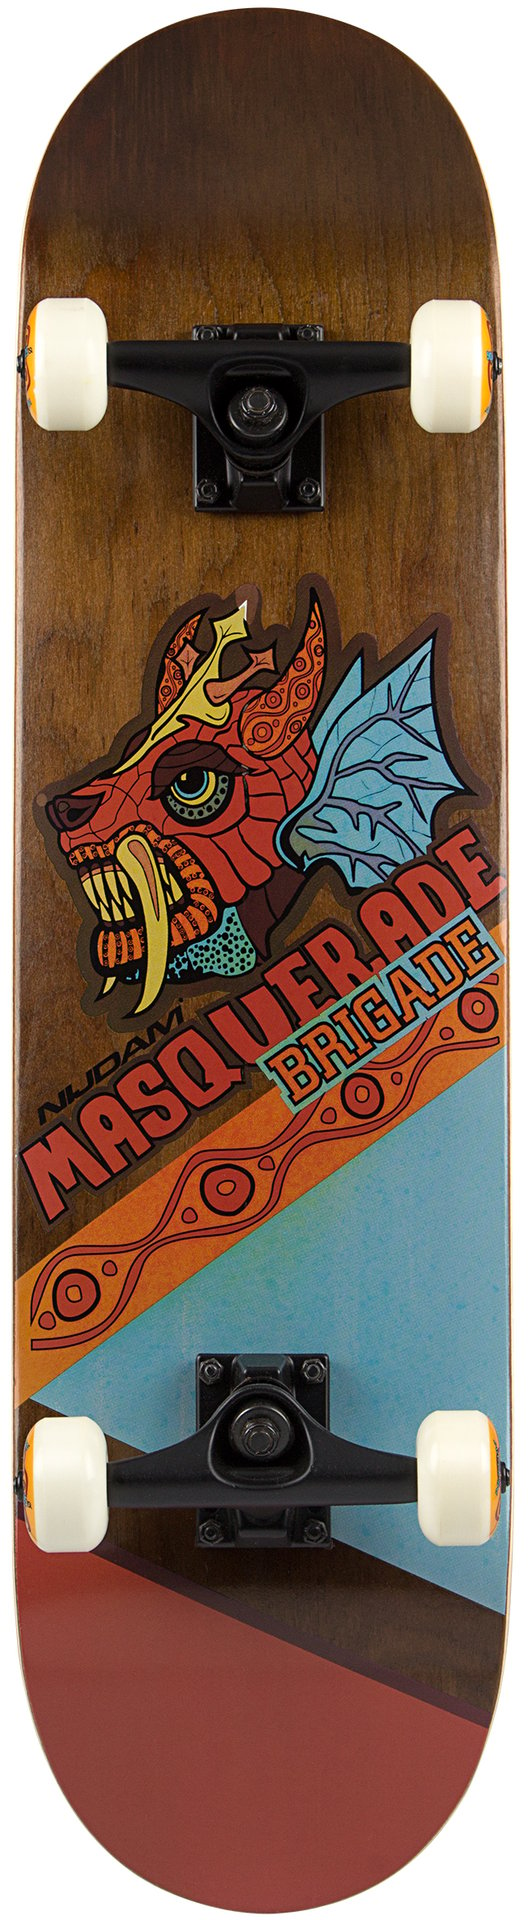 Mid-Level Skateboard • Masquerade Brigade •